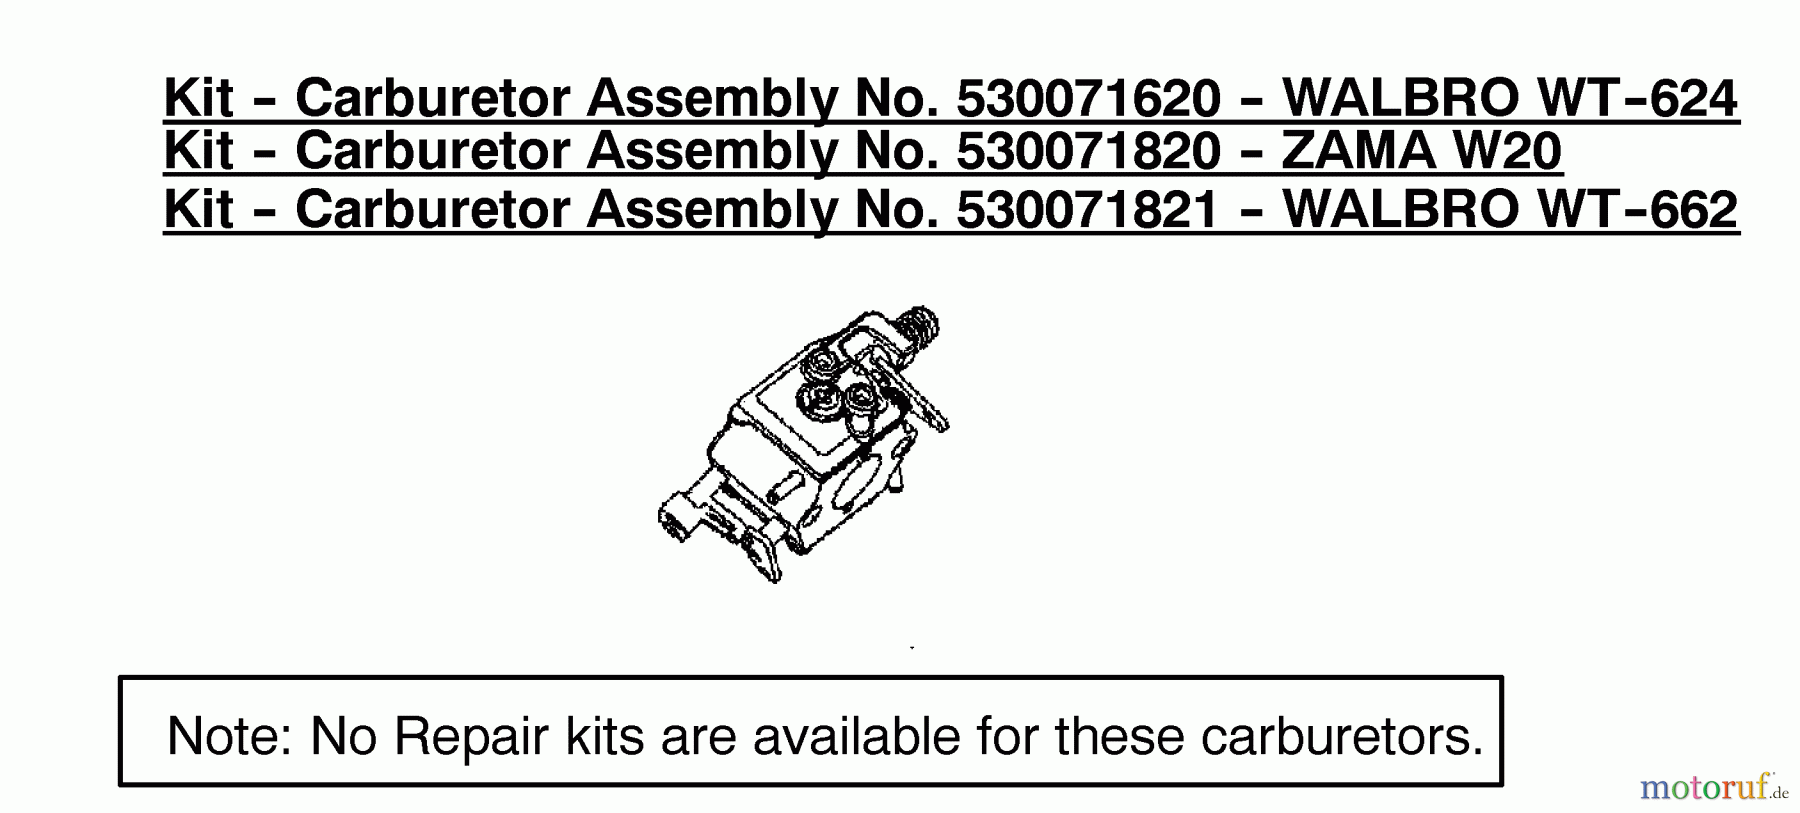  Poulan / Weed Eater Motorsägen 2055 (Type 4) - Poulan Woodsman Chainsaw Kit - Carburetor Assembly 530071820/530071821/530071620